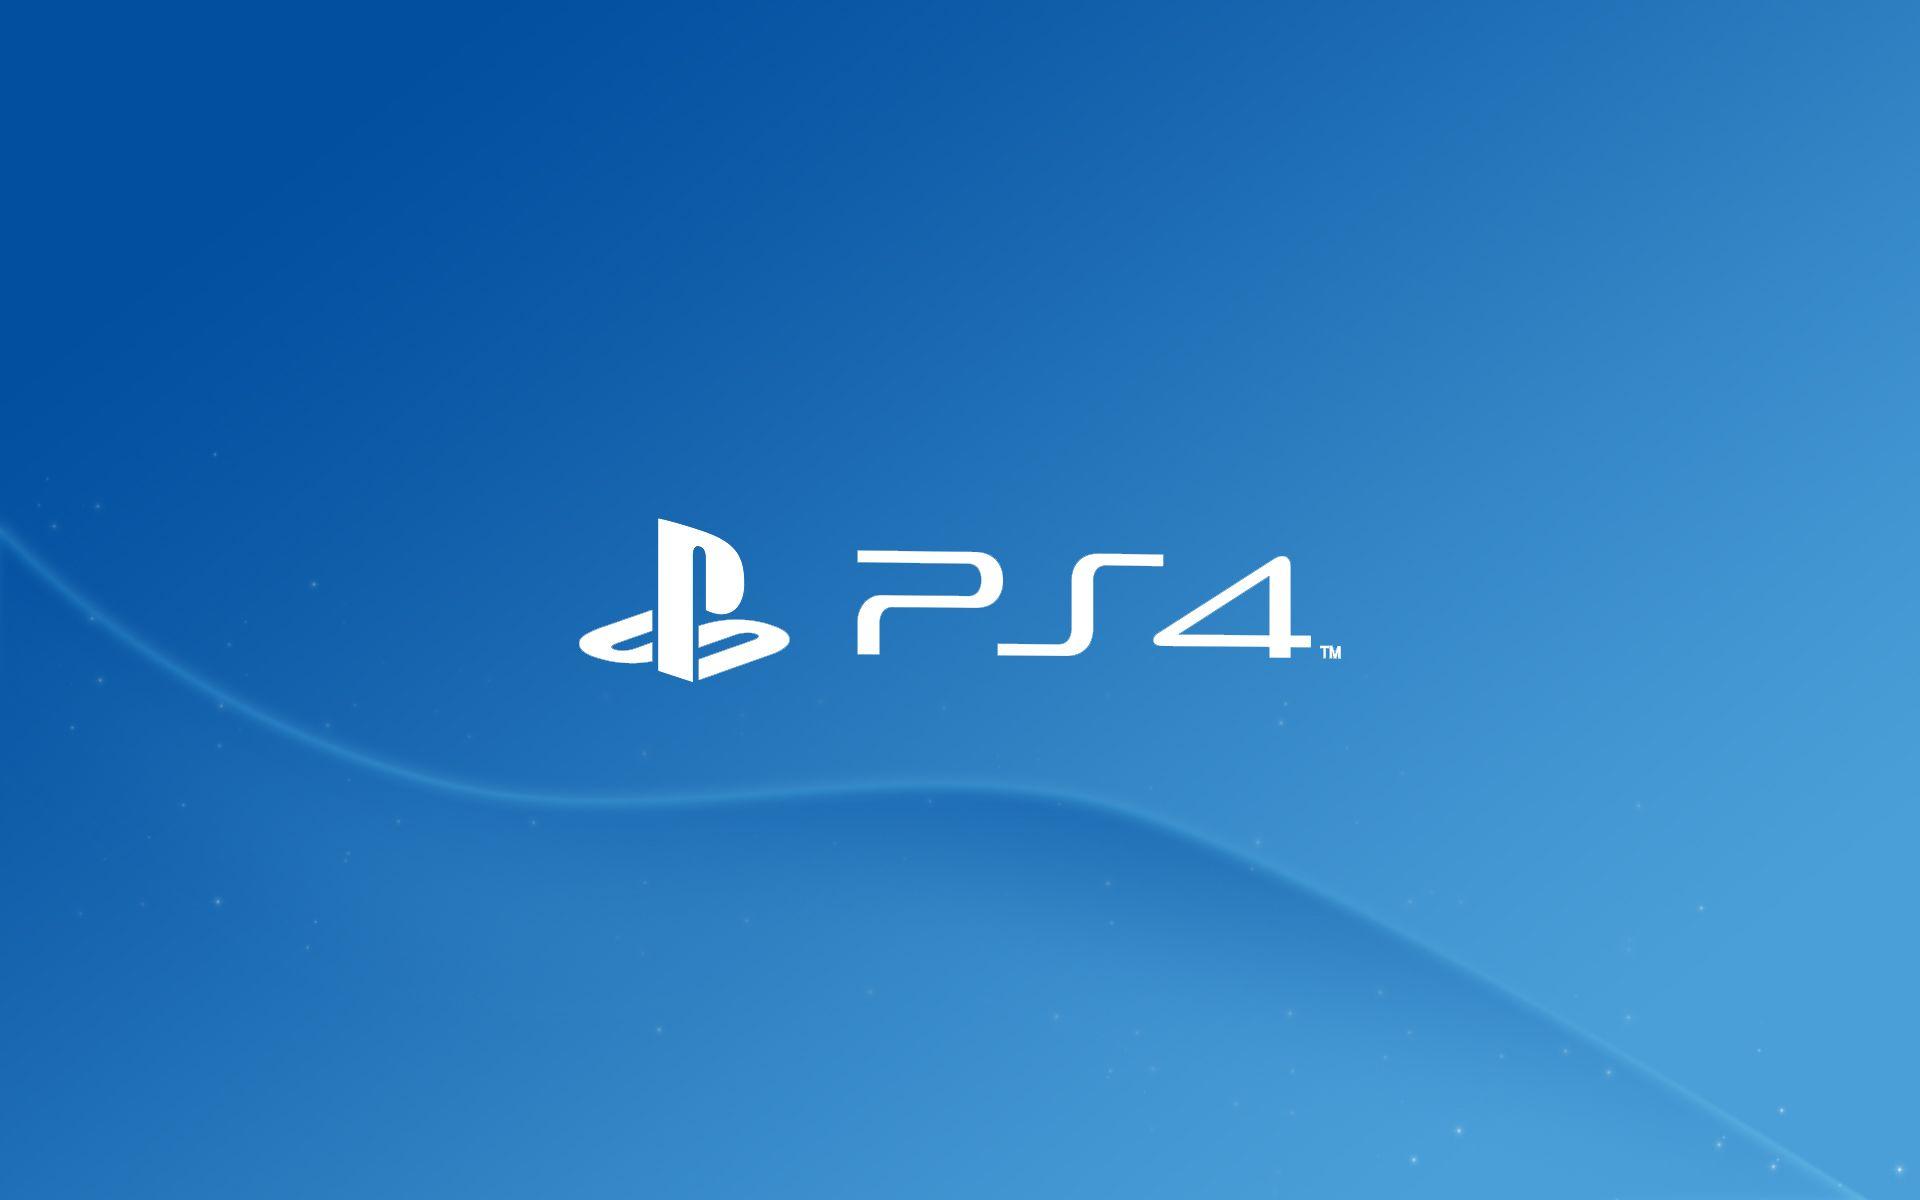 Sony PlayStation 4 Logo - Sony ‑ PlayStation 4 Wallpaper